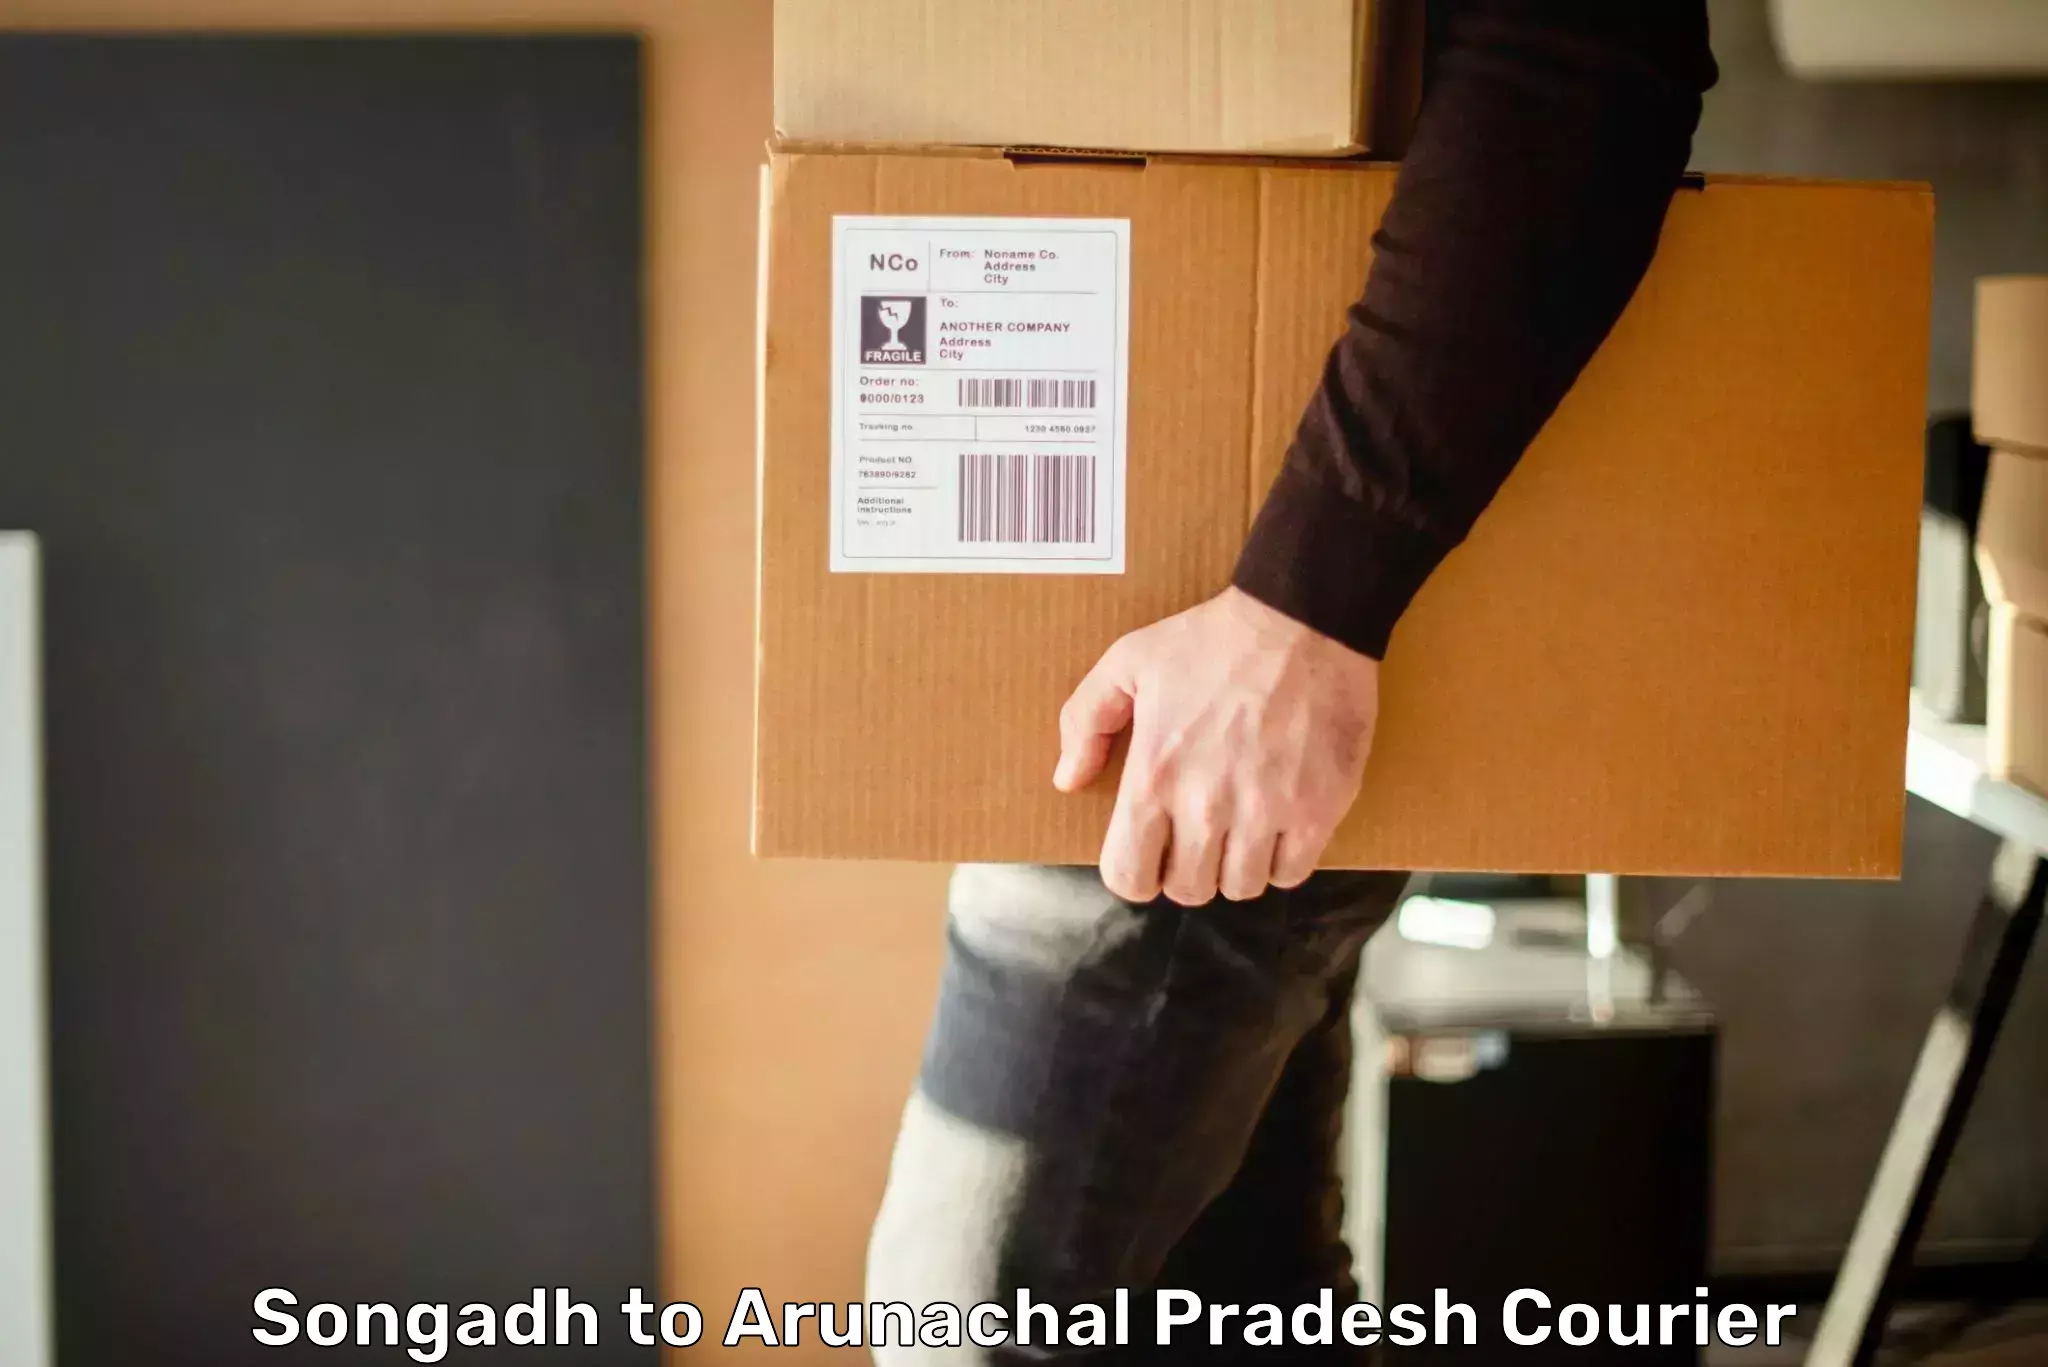 Express courier capabilities Songadh to Arunachal Pradesh